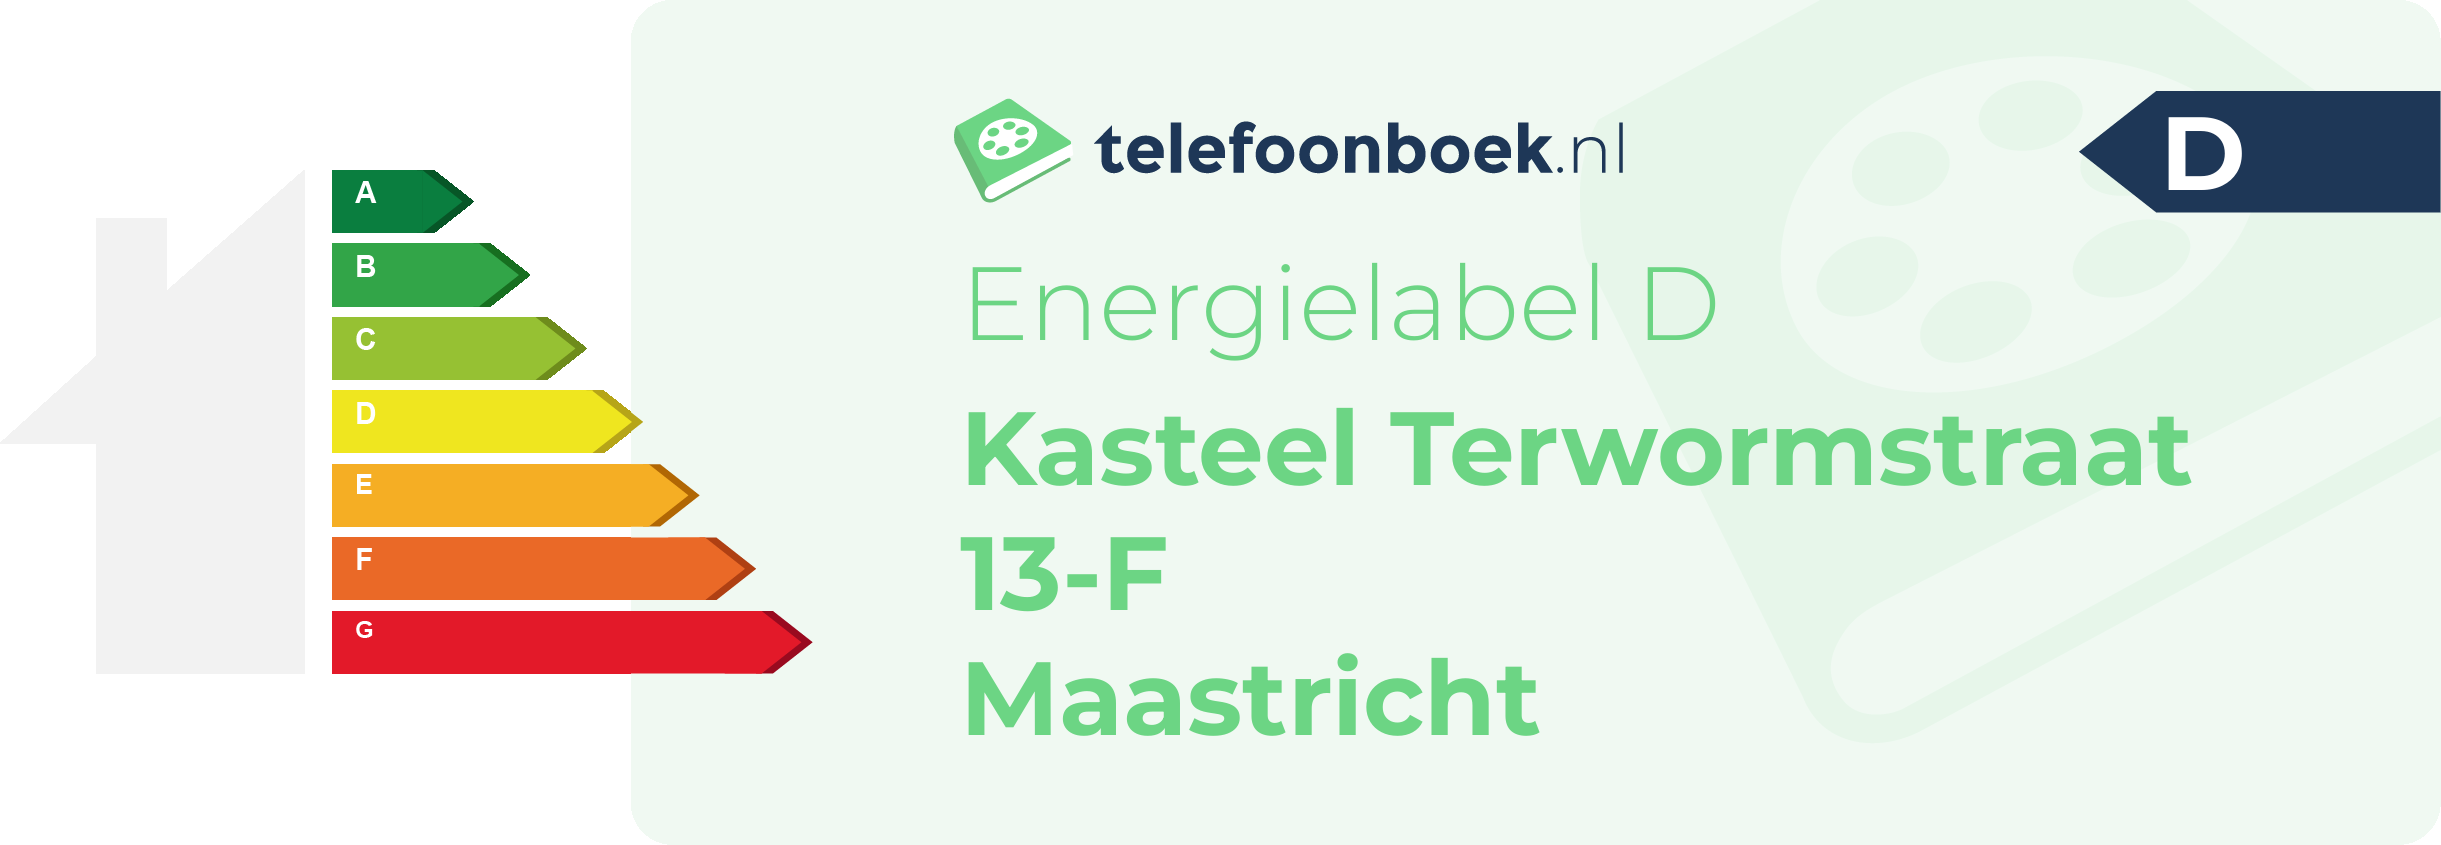 Energielabel Kasteel Terwormstraat 13-F Maastricht